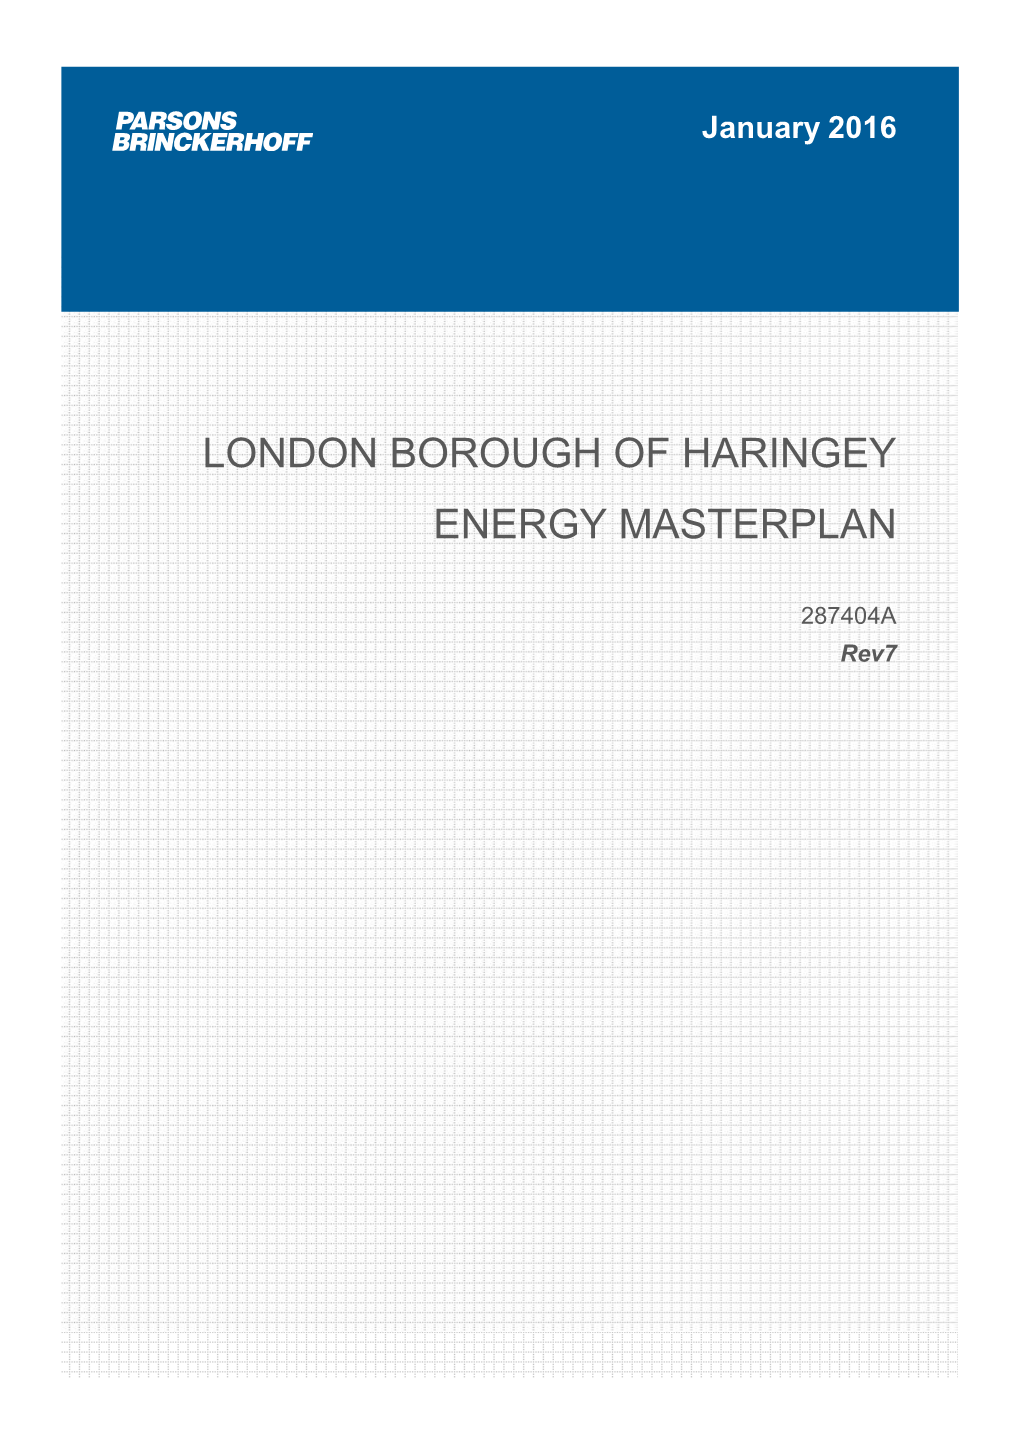 London Borough of Haringey Energy Masterplan